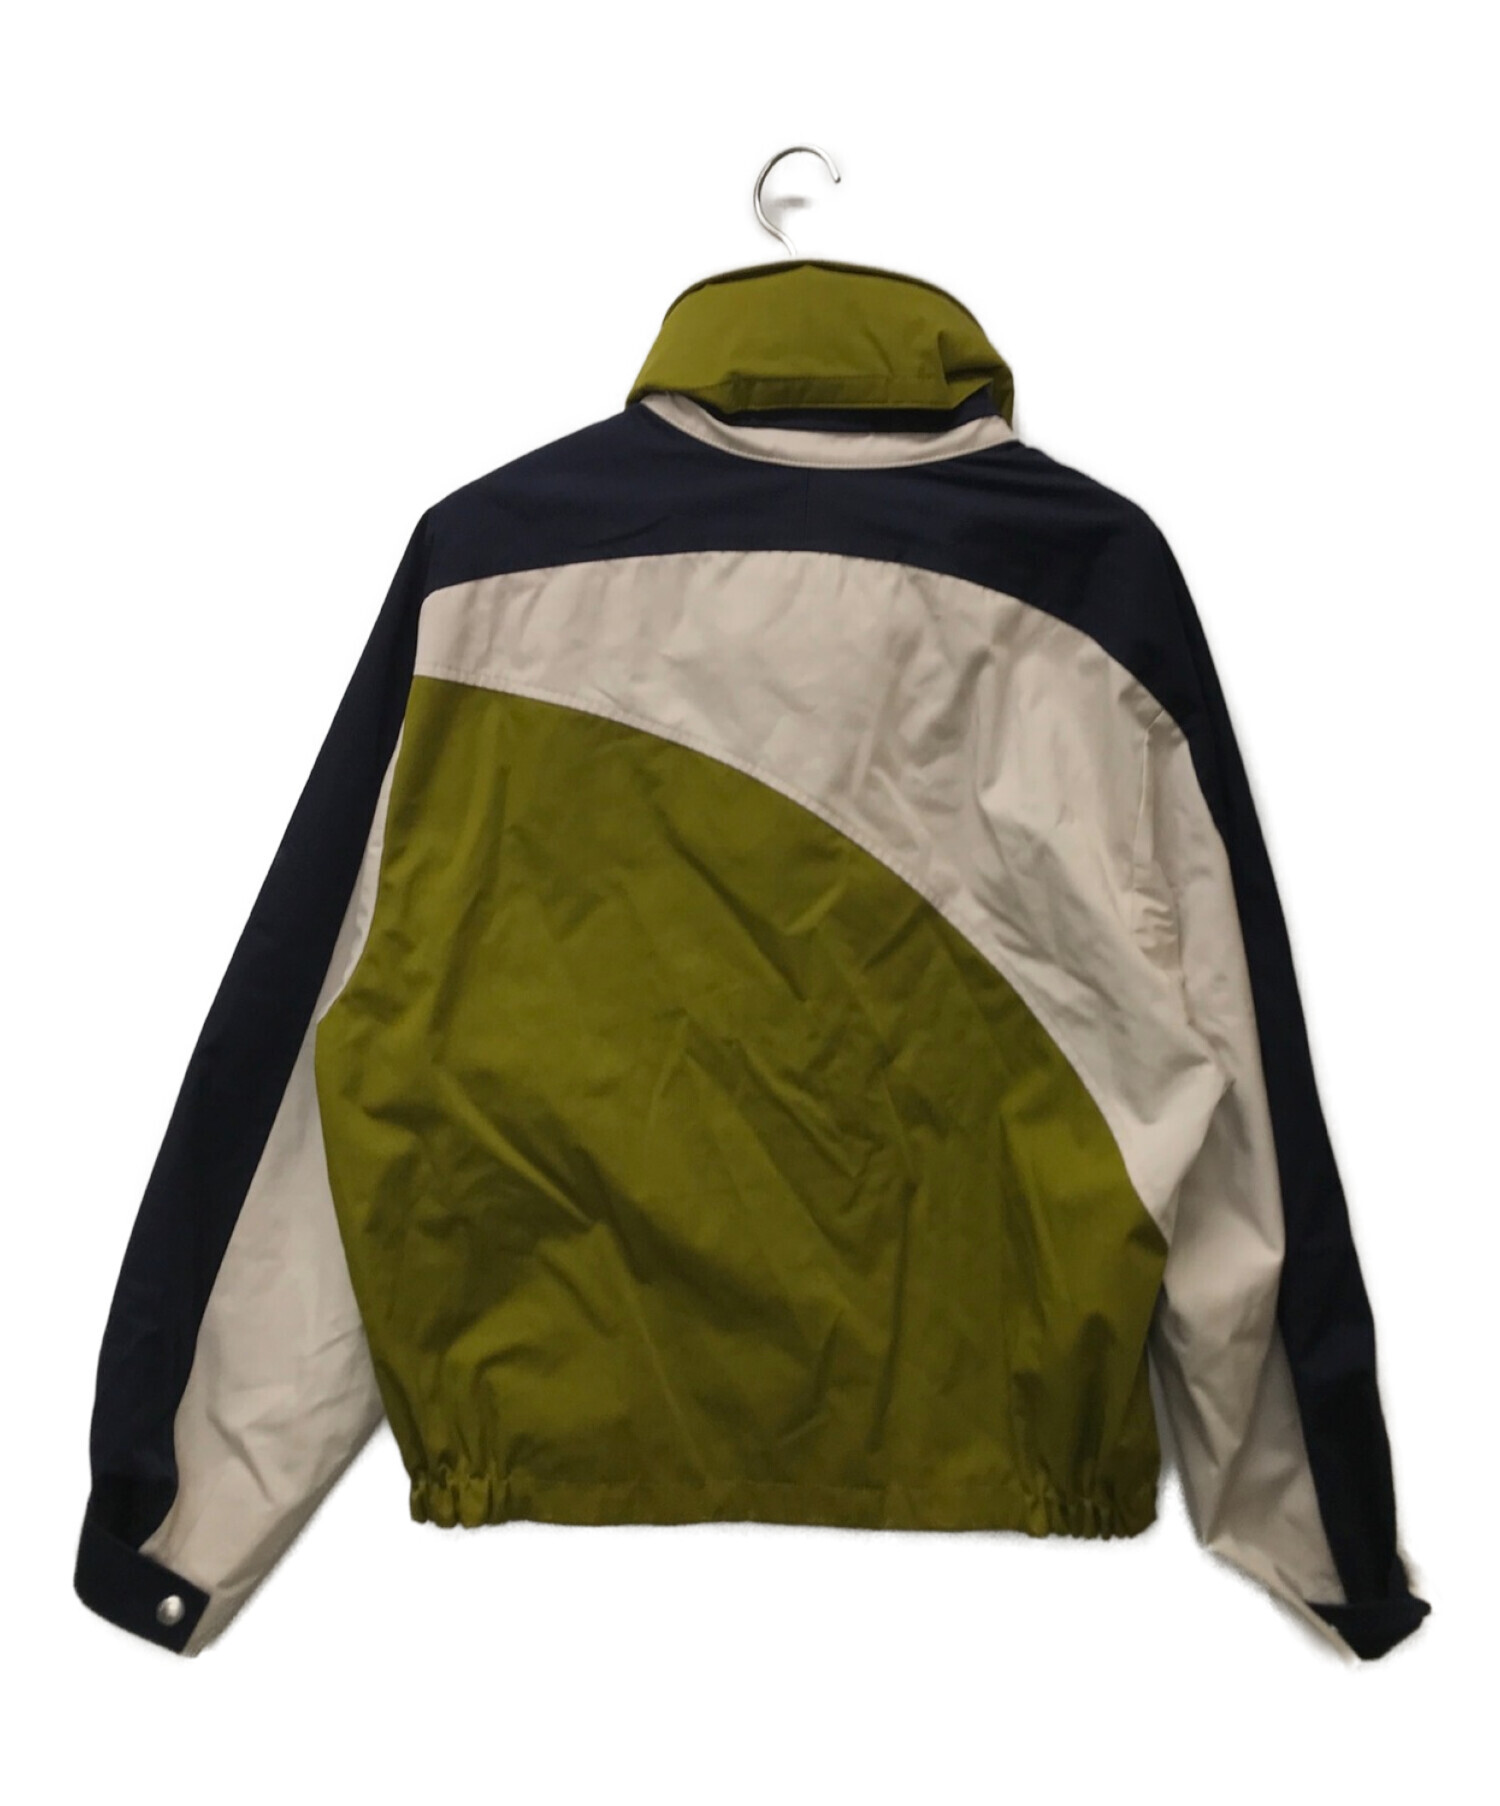 KENZO (ケンゾー) Coated Cotton Colorblock Jacket ホワイト×グリーン サイズ:L